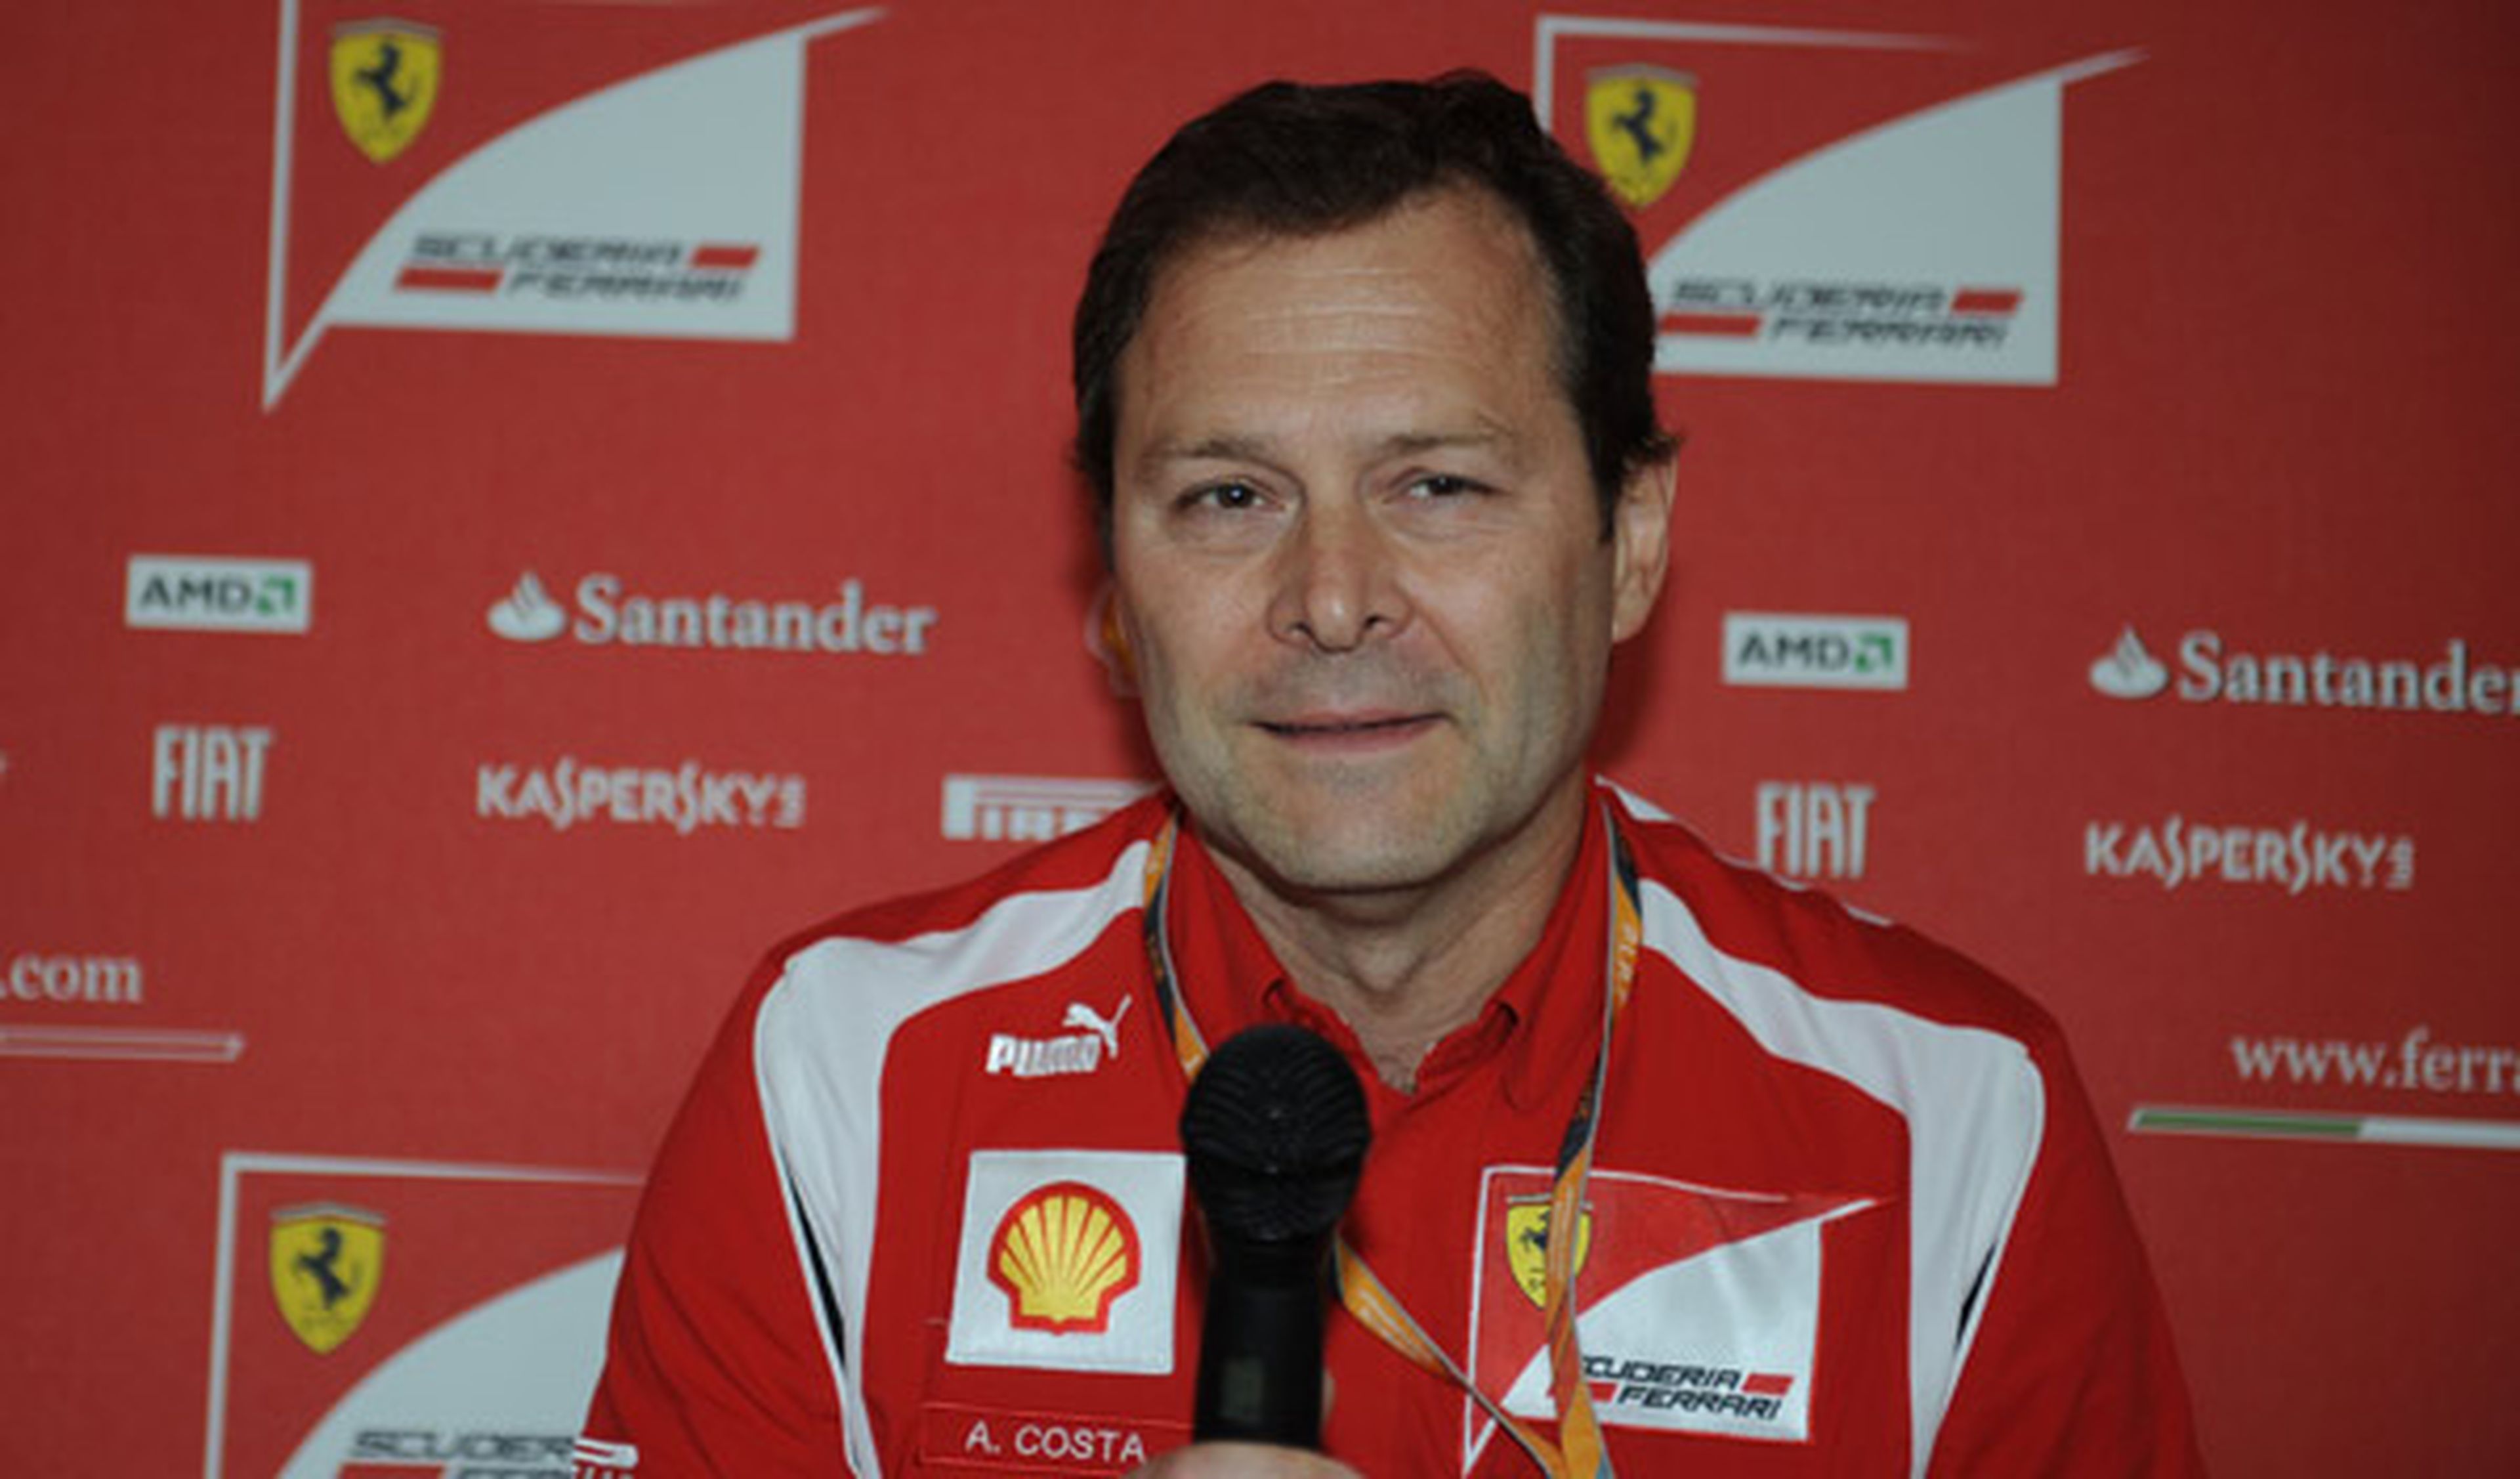 Aldo Costa, destituido de Ferrari